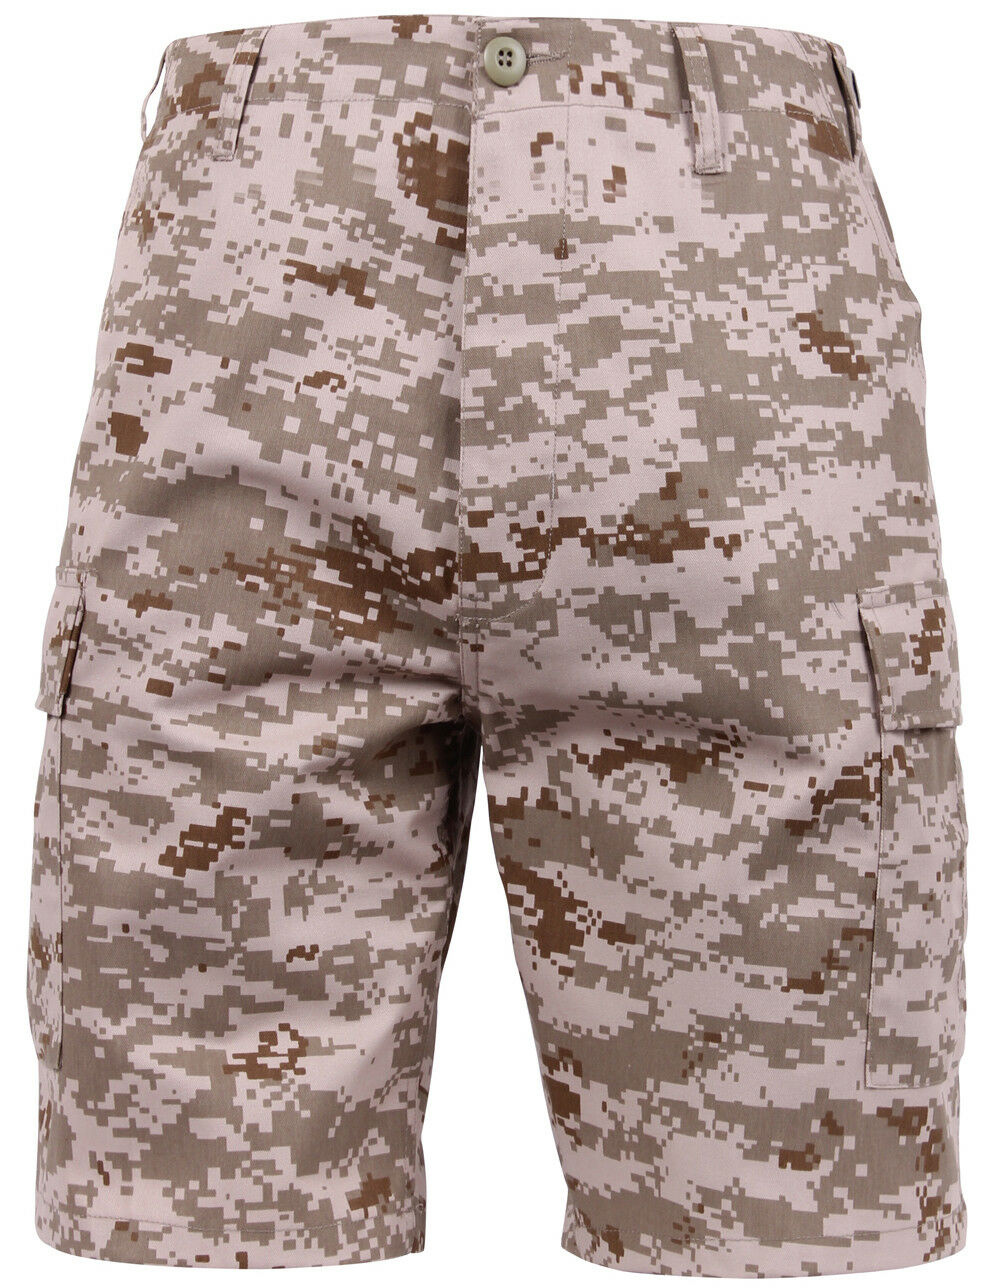 military style bdu shorts desert digital camo rothco 65416